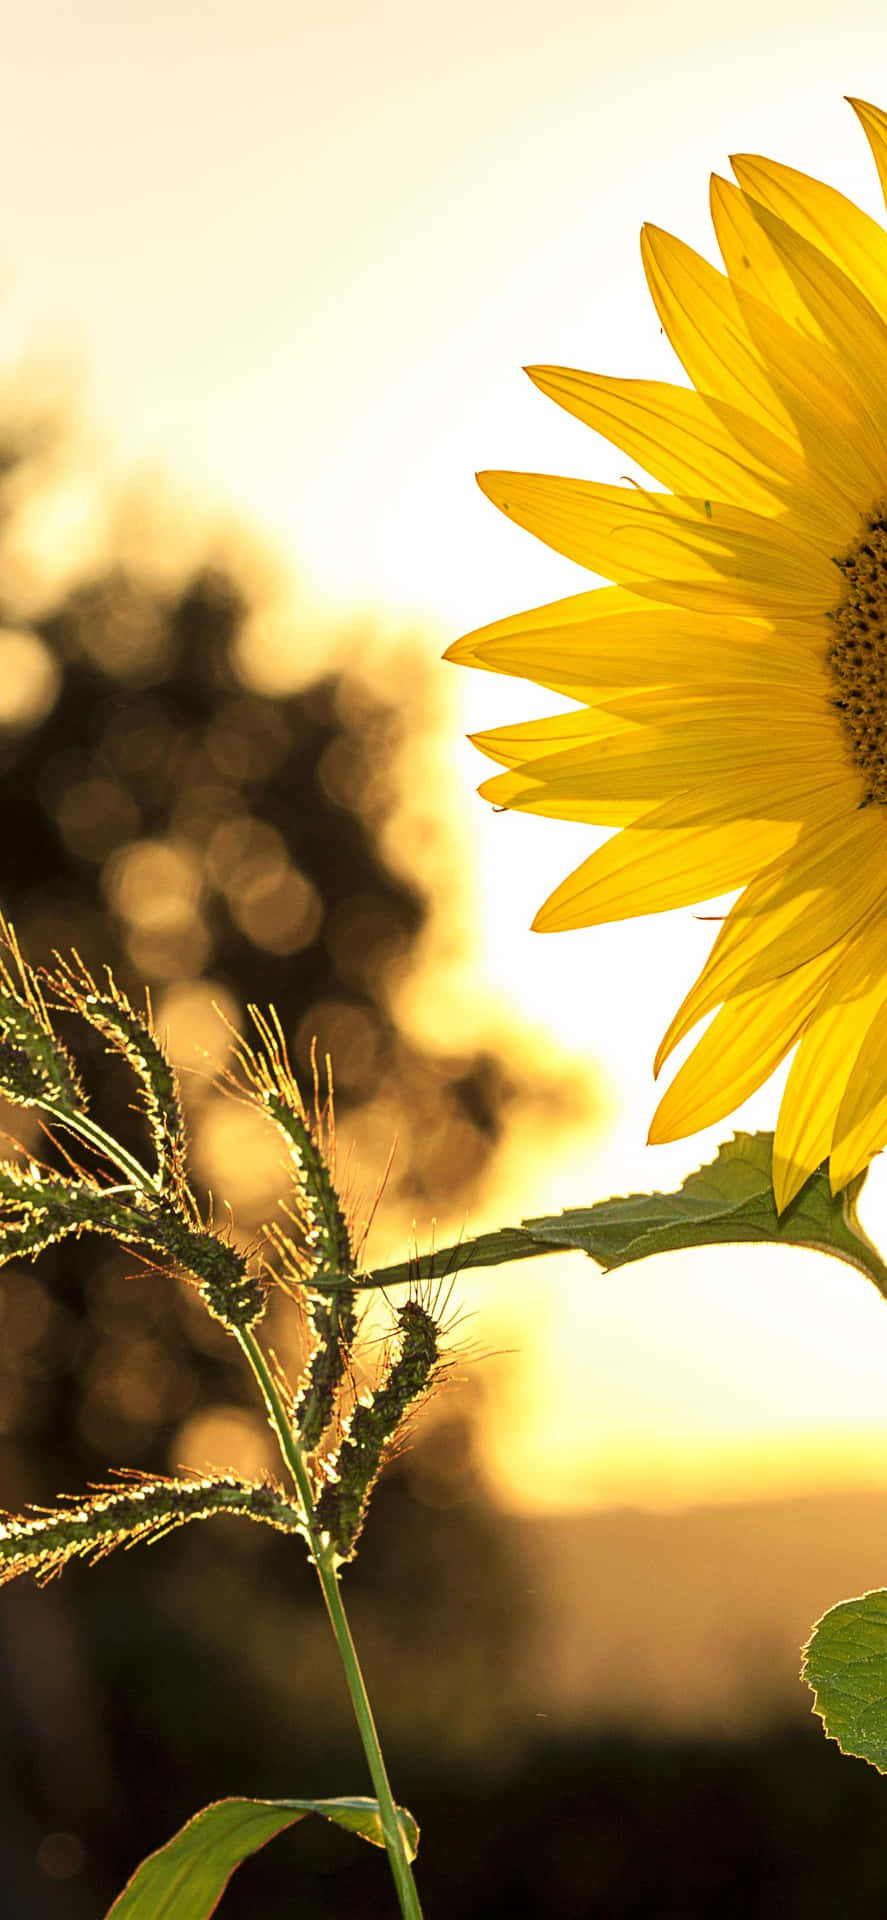 A Sunflower In The Field Wallpaper